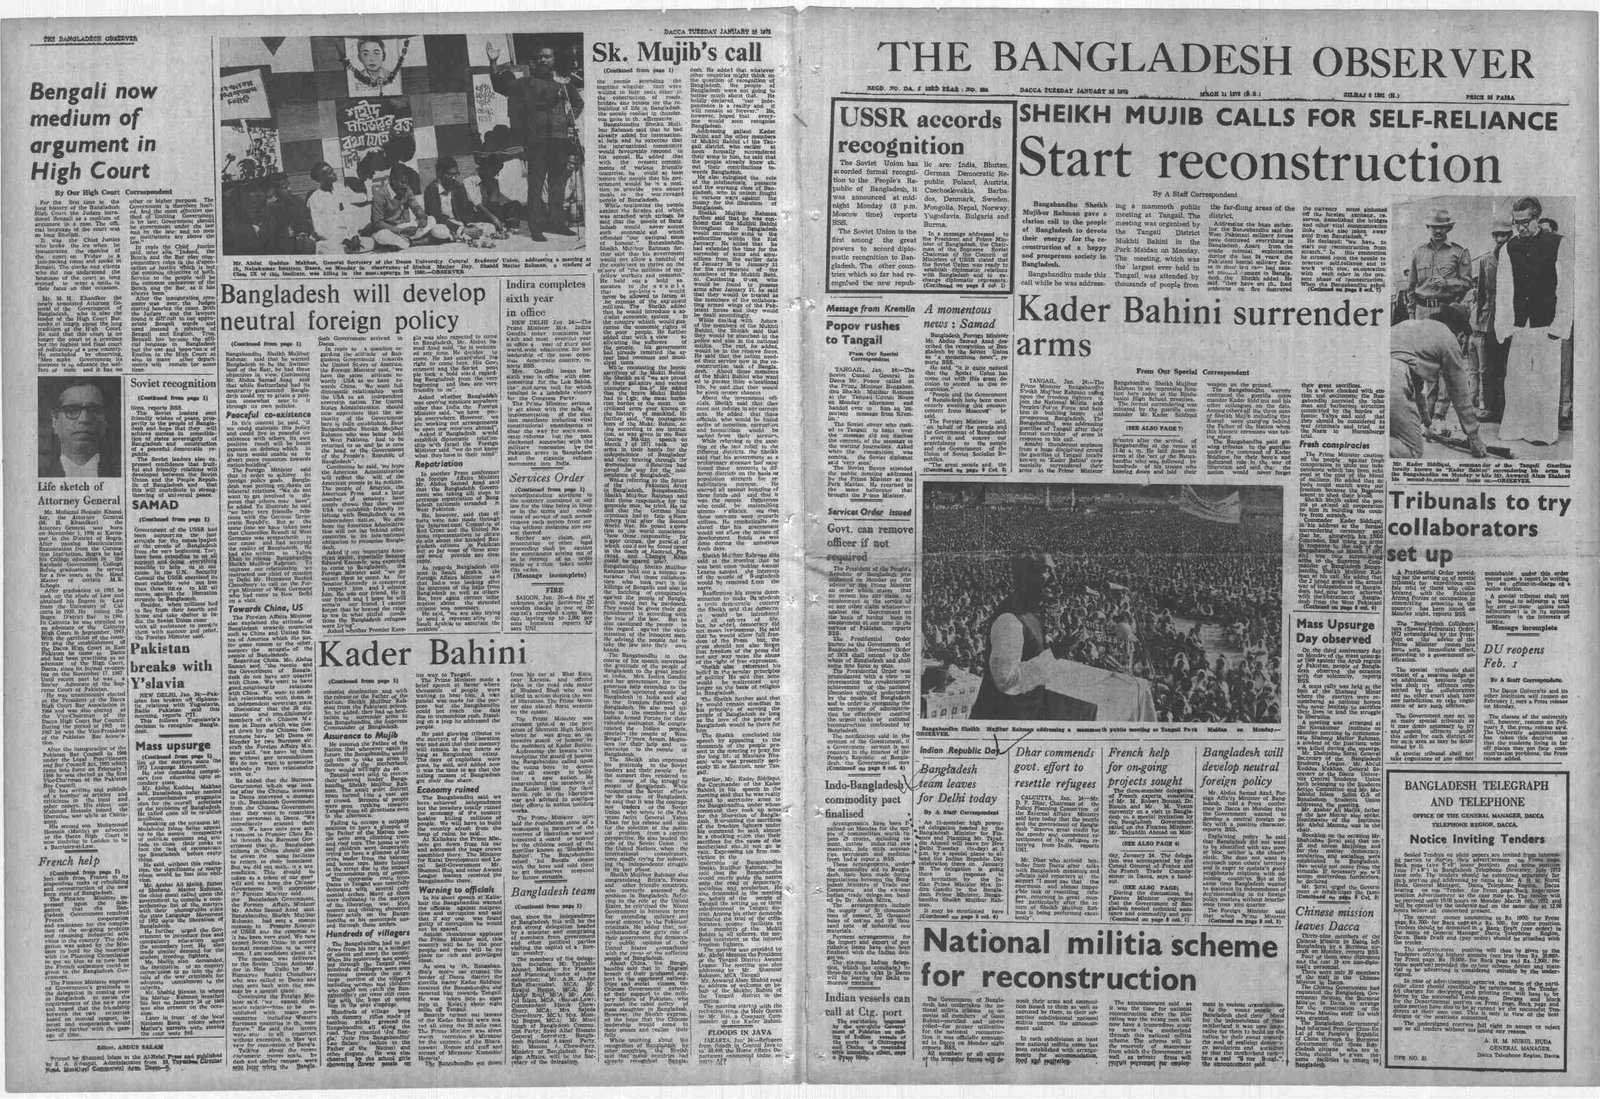 25JAN1972-Bangladesh Observer-Regular-Page 1 and 8